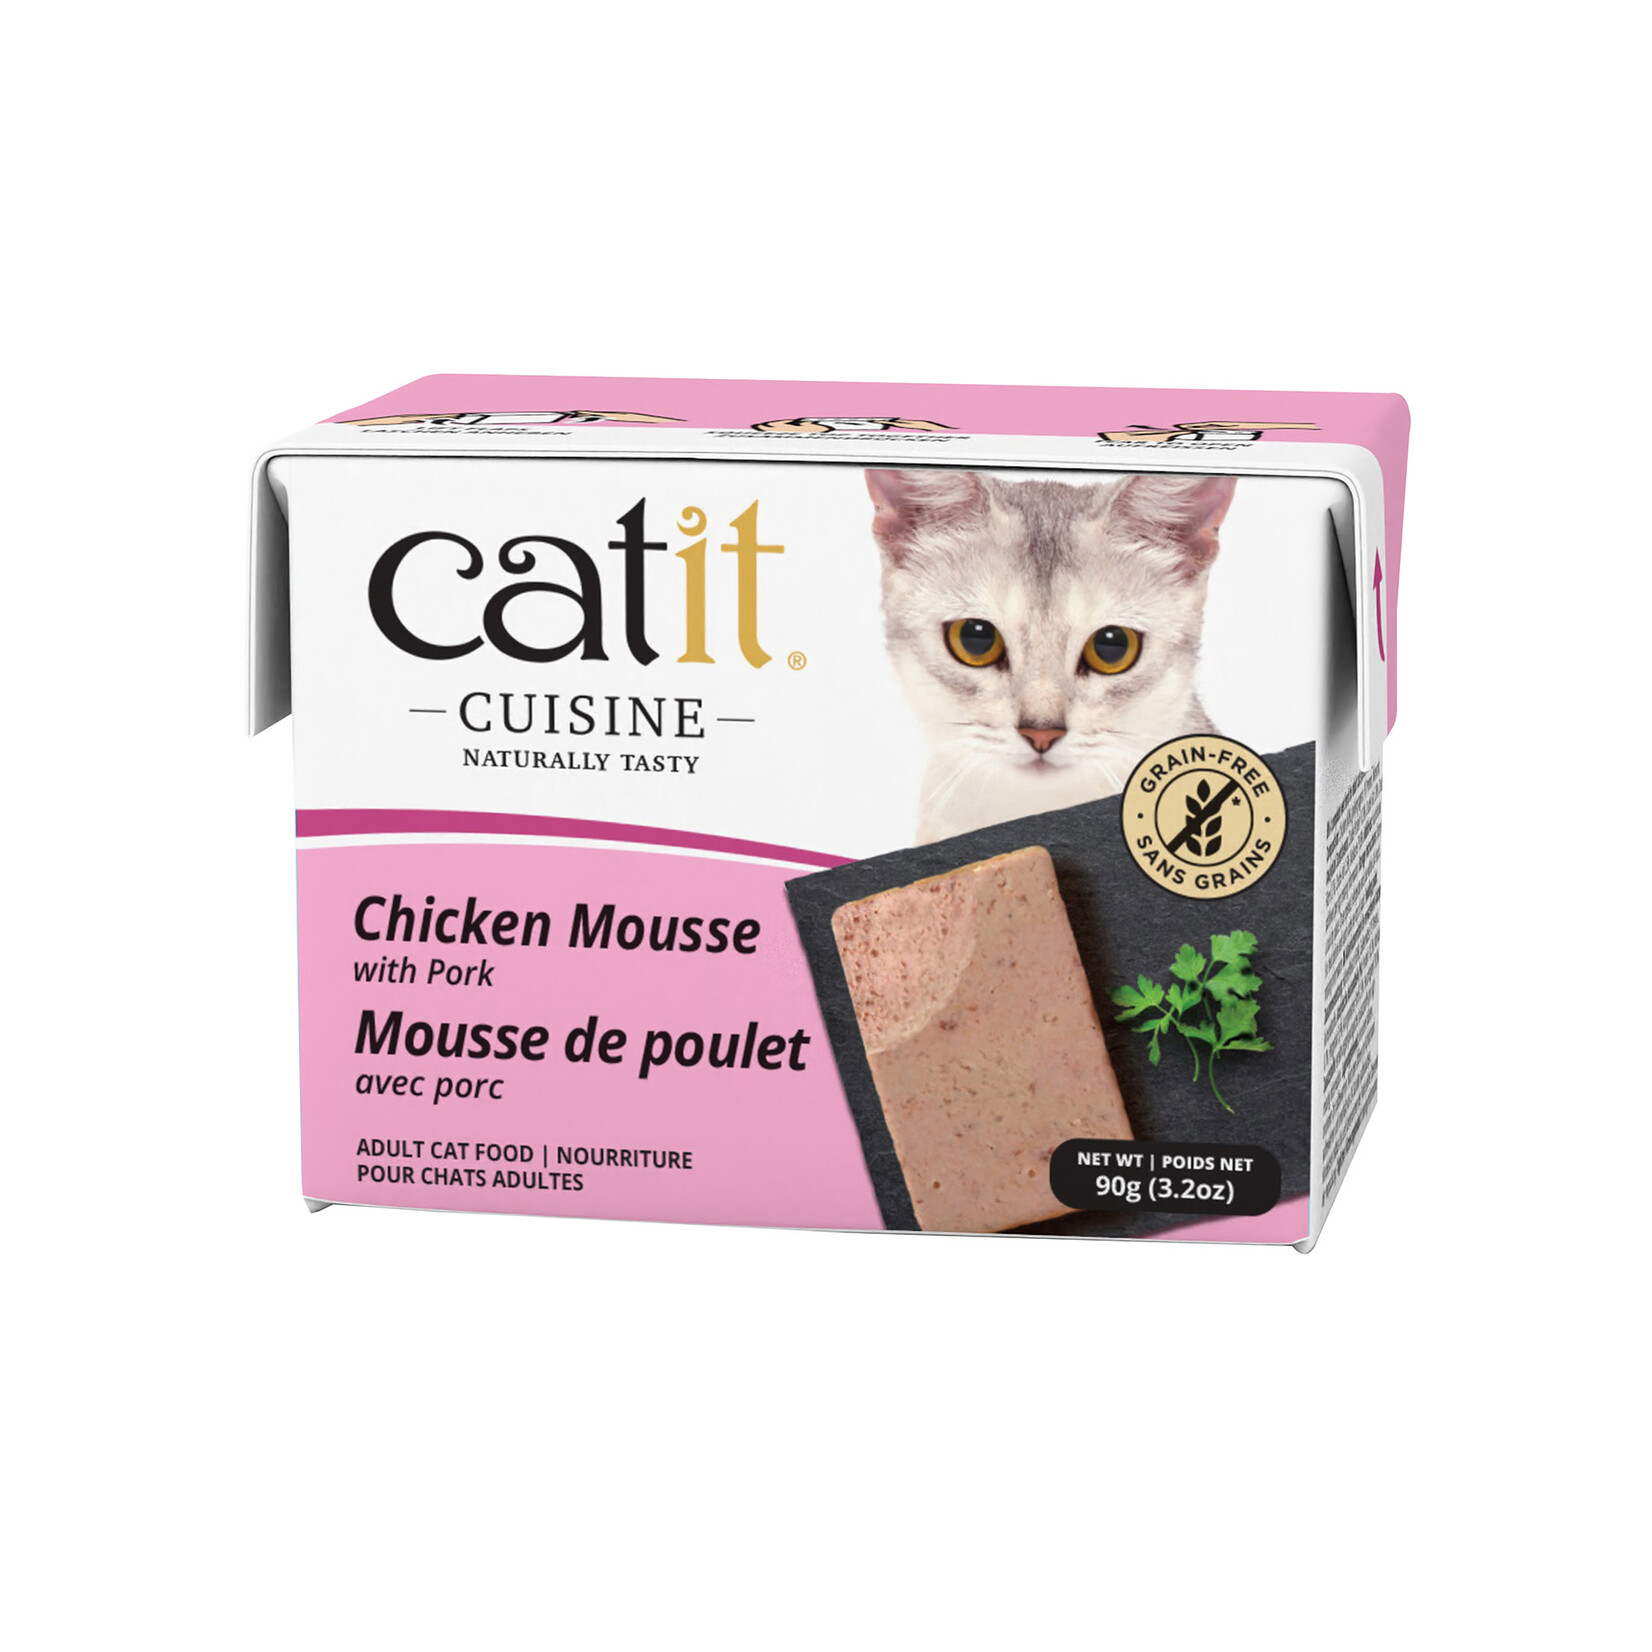 CAT IT Catit Cuisine Chicken Mousse with Pork - 90 g